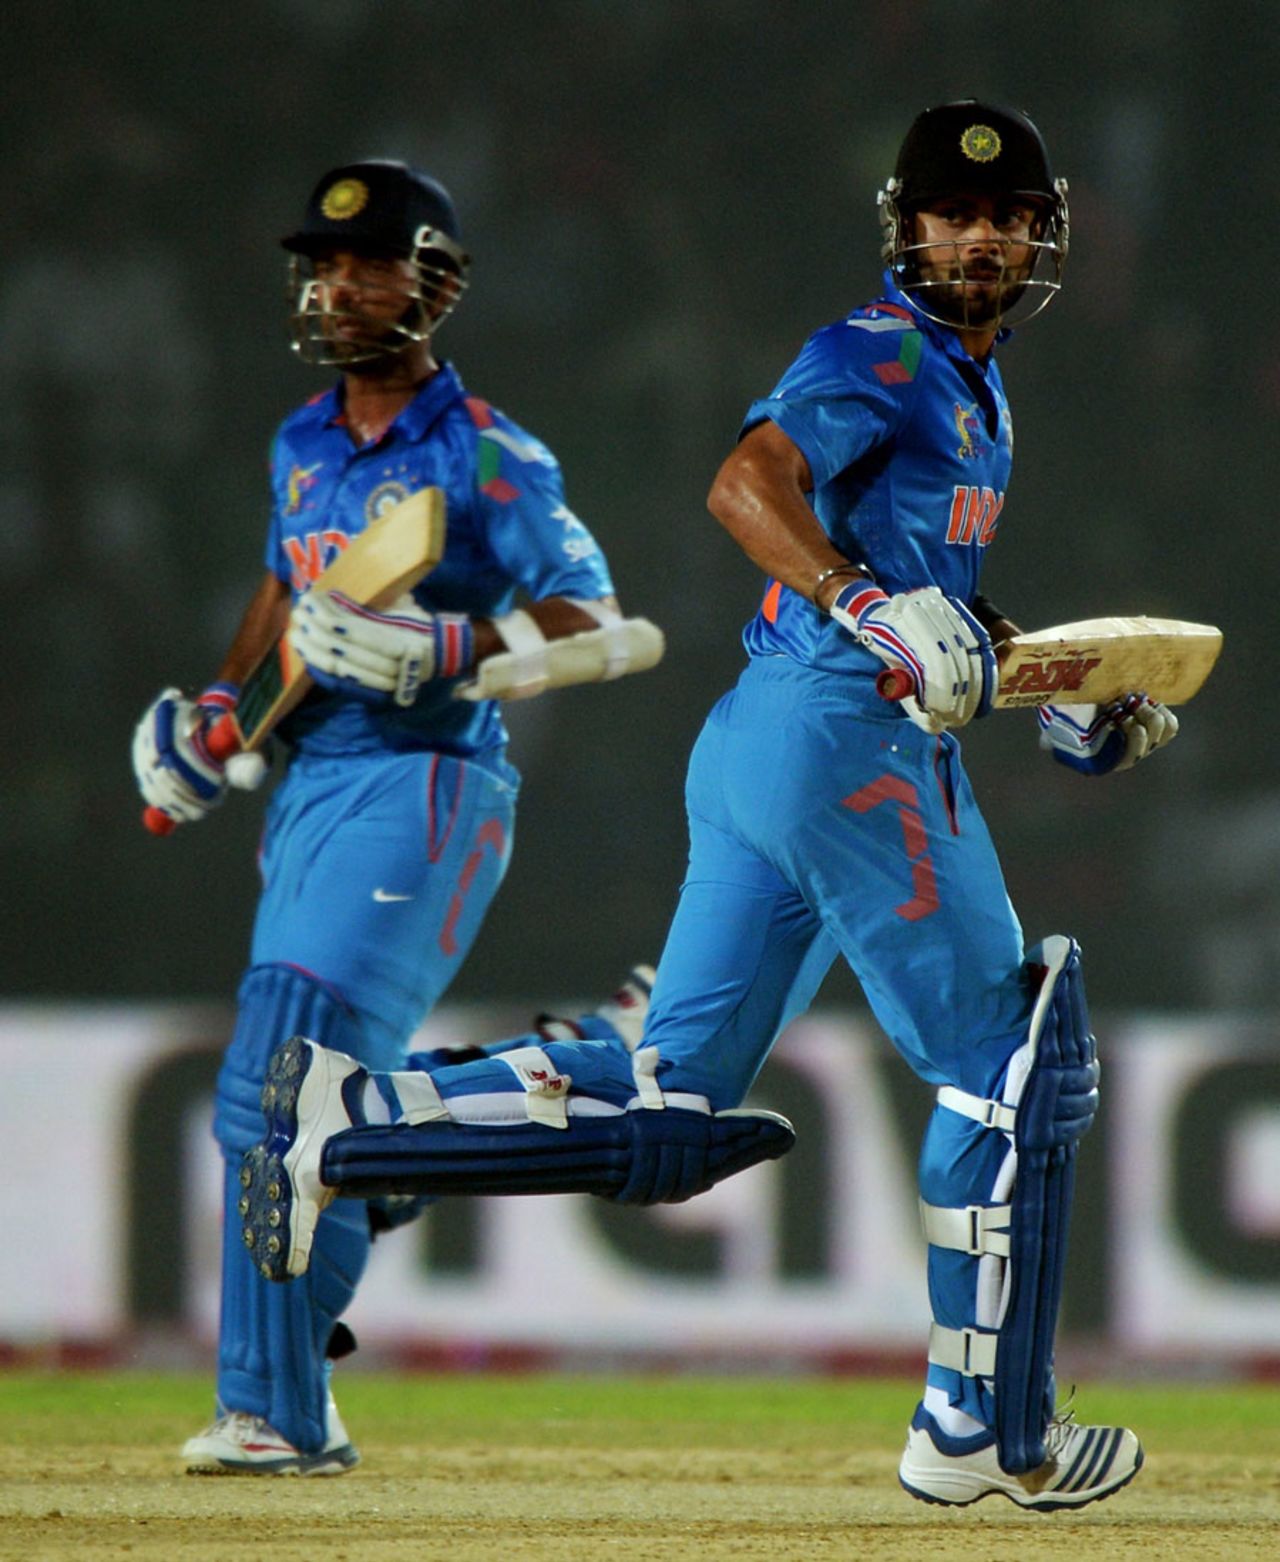 Virat Kohli and Ajinkya Rahane put on 213 runs for the third wicket, Bangladesh v India, Asia Cup 2014, Fatullah, February 26, 2014